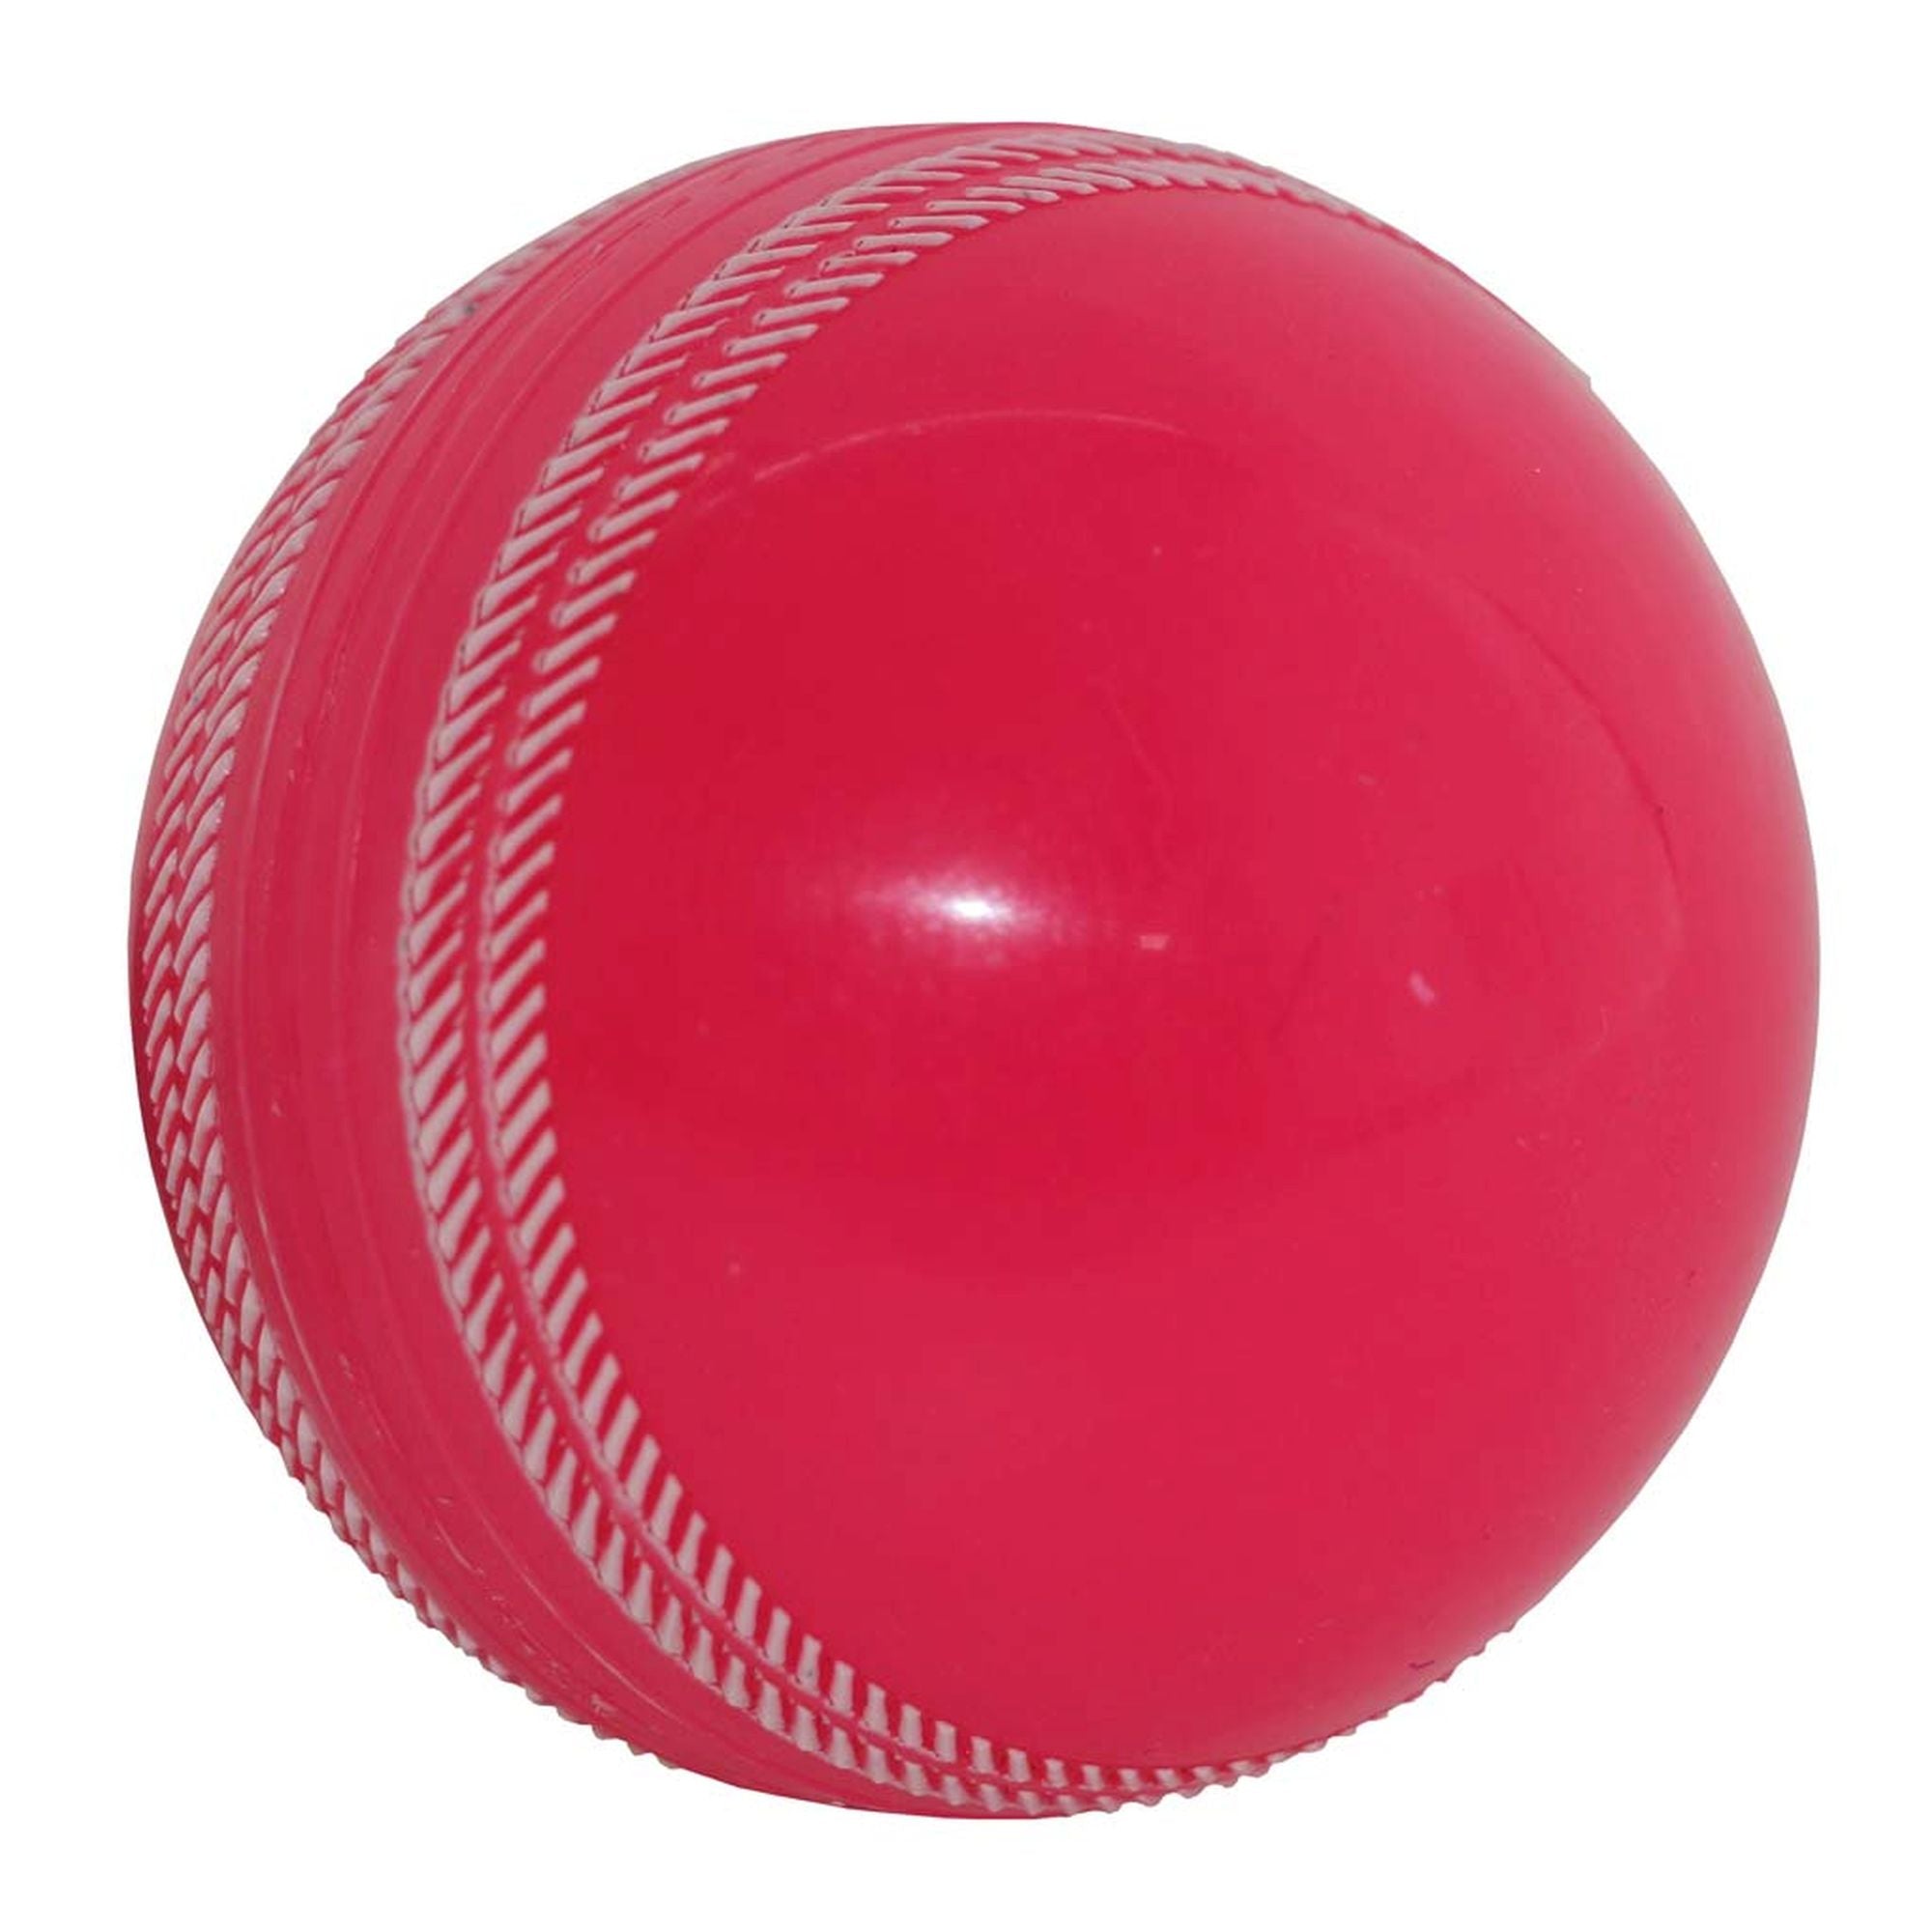 Gray Nicolls Fusion 130gm Cricket Ball - Pink